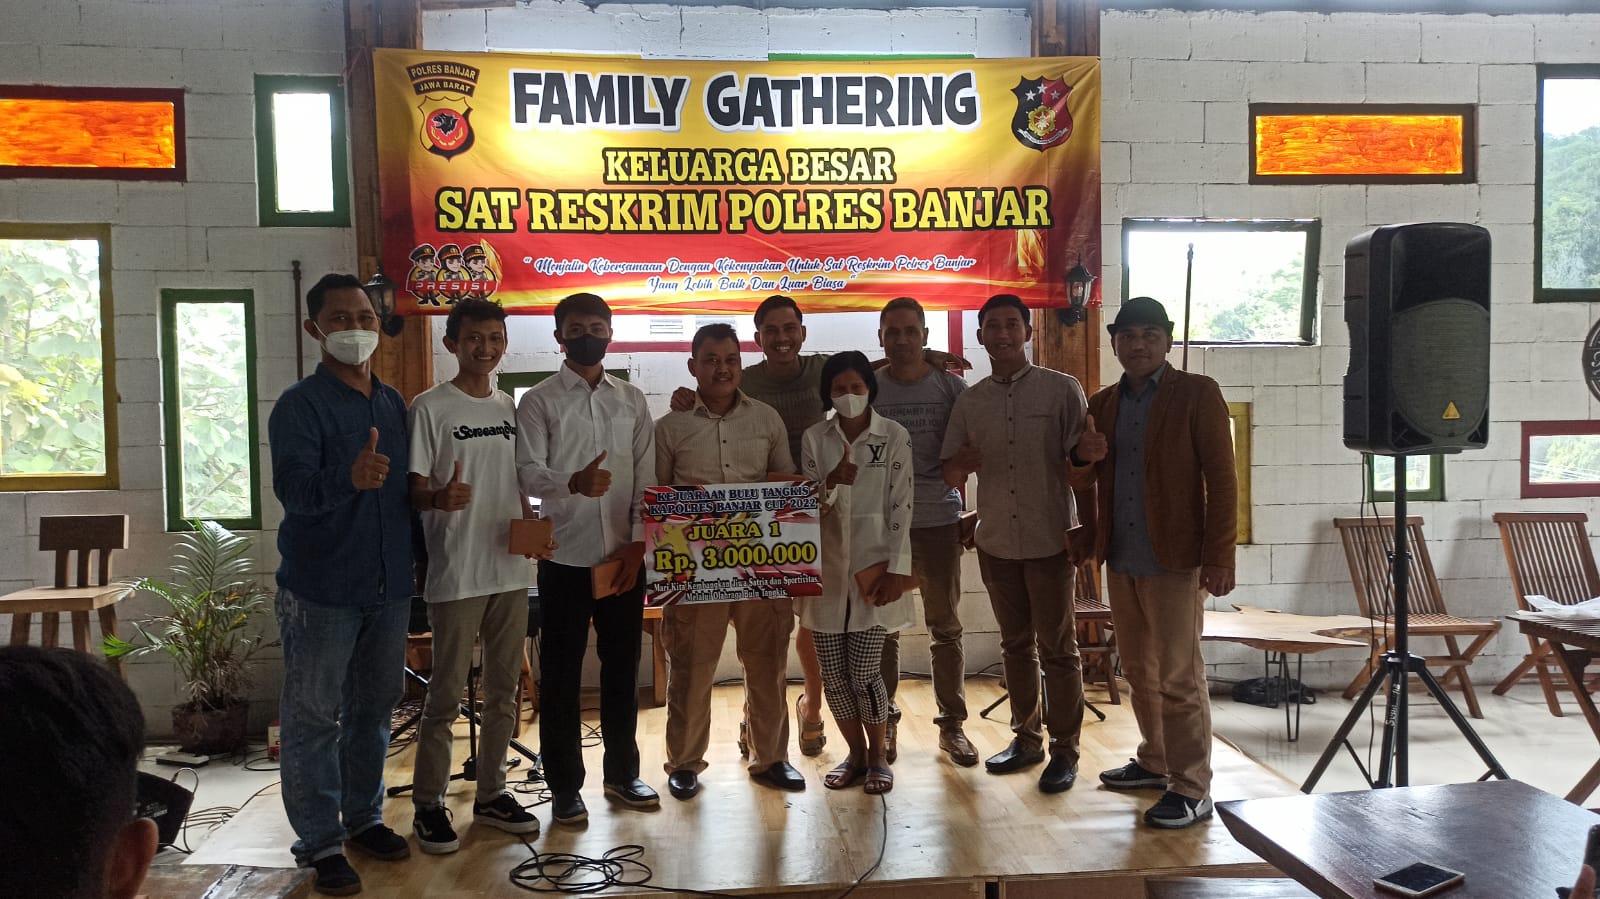 Jelang Ramadhan, Satreskrim Polres Banjar Family Gatering